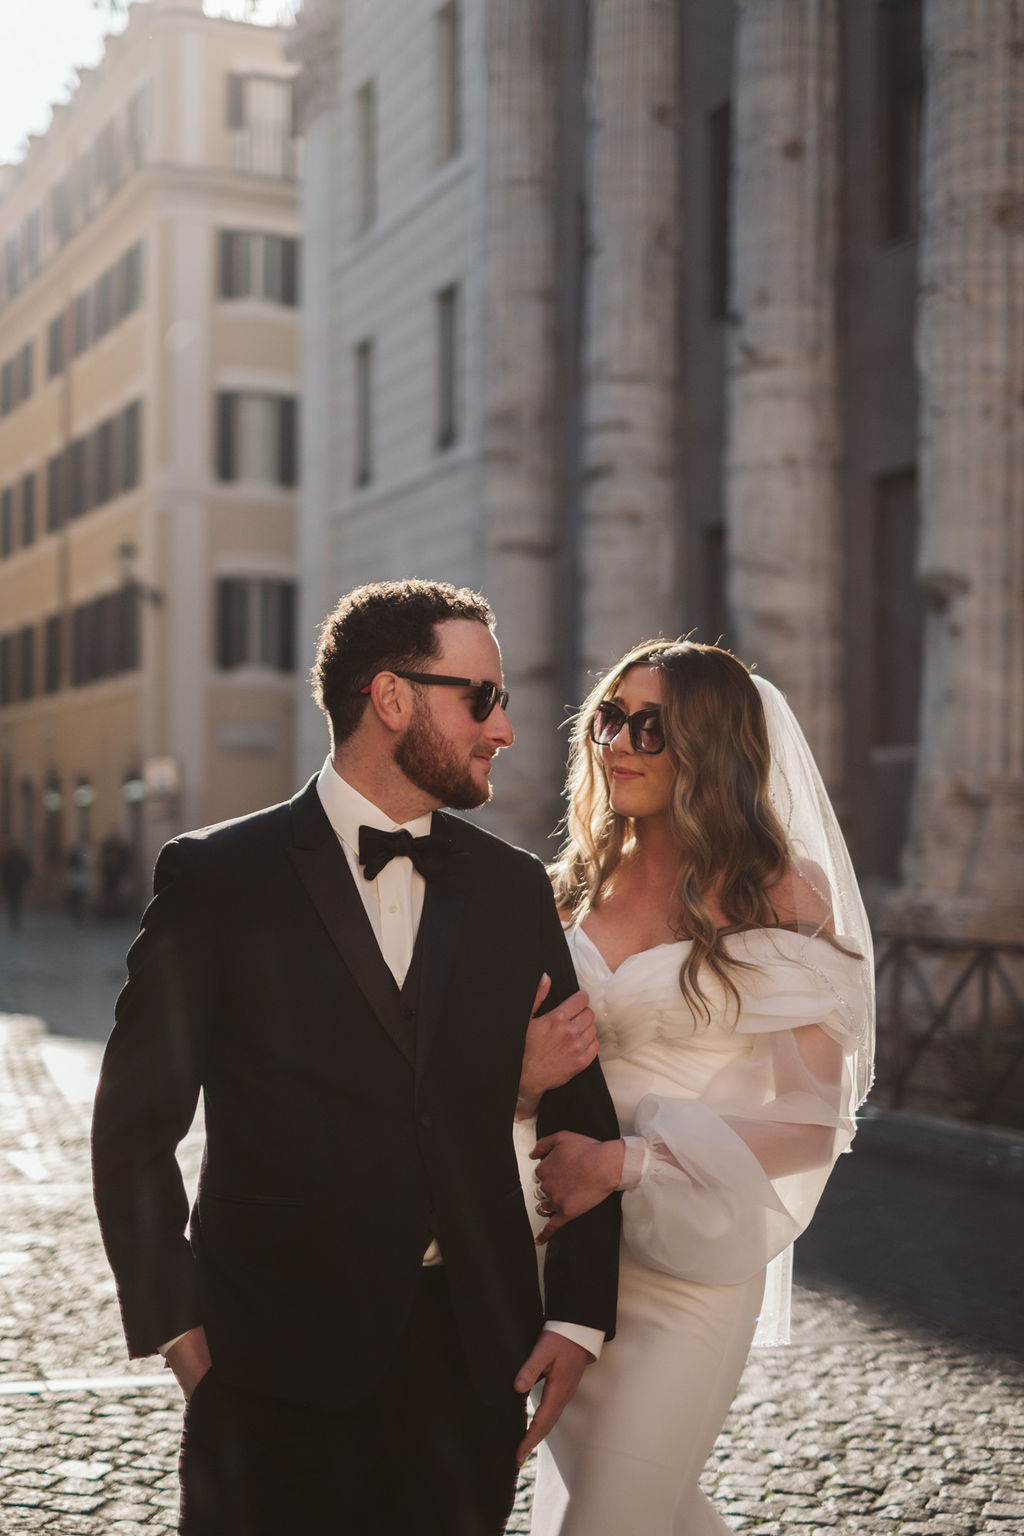 Stylish Italian elopement couple in sunglasses